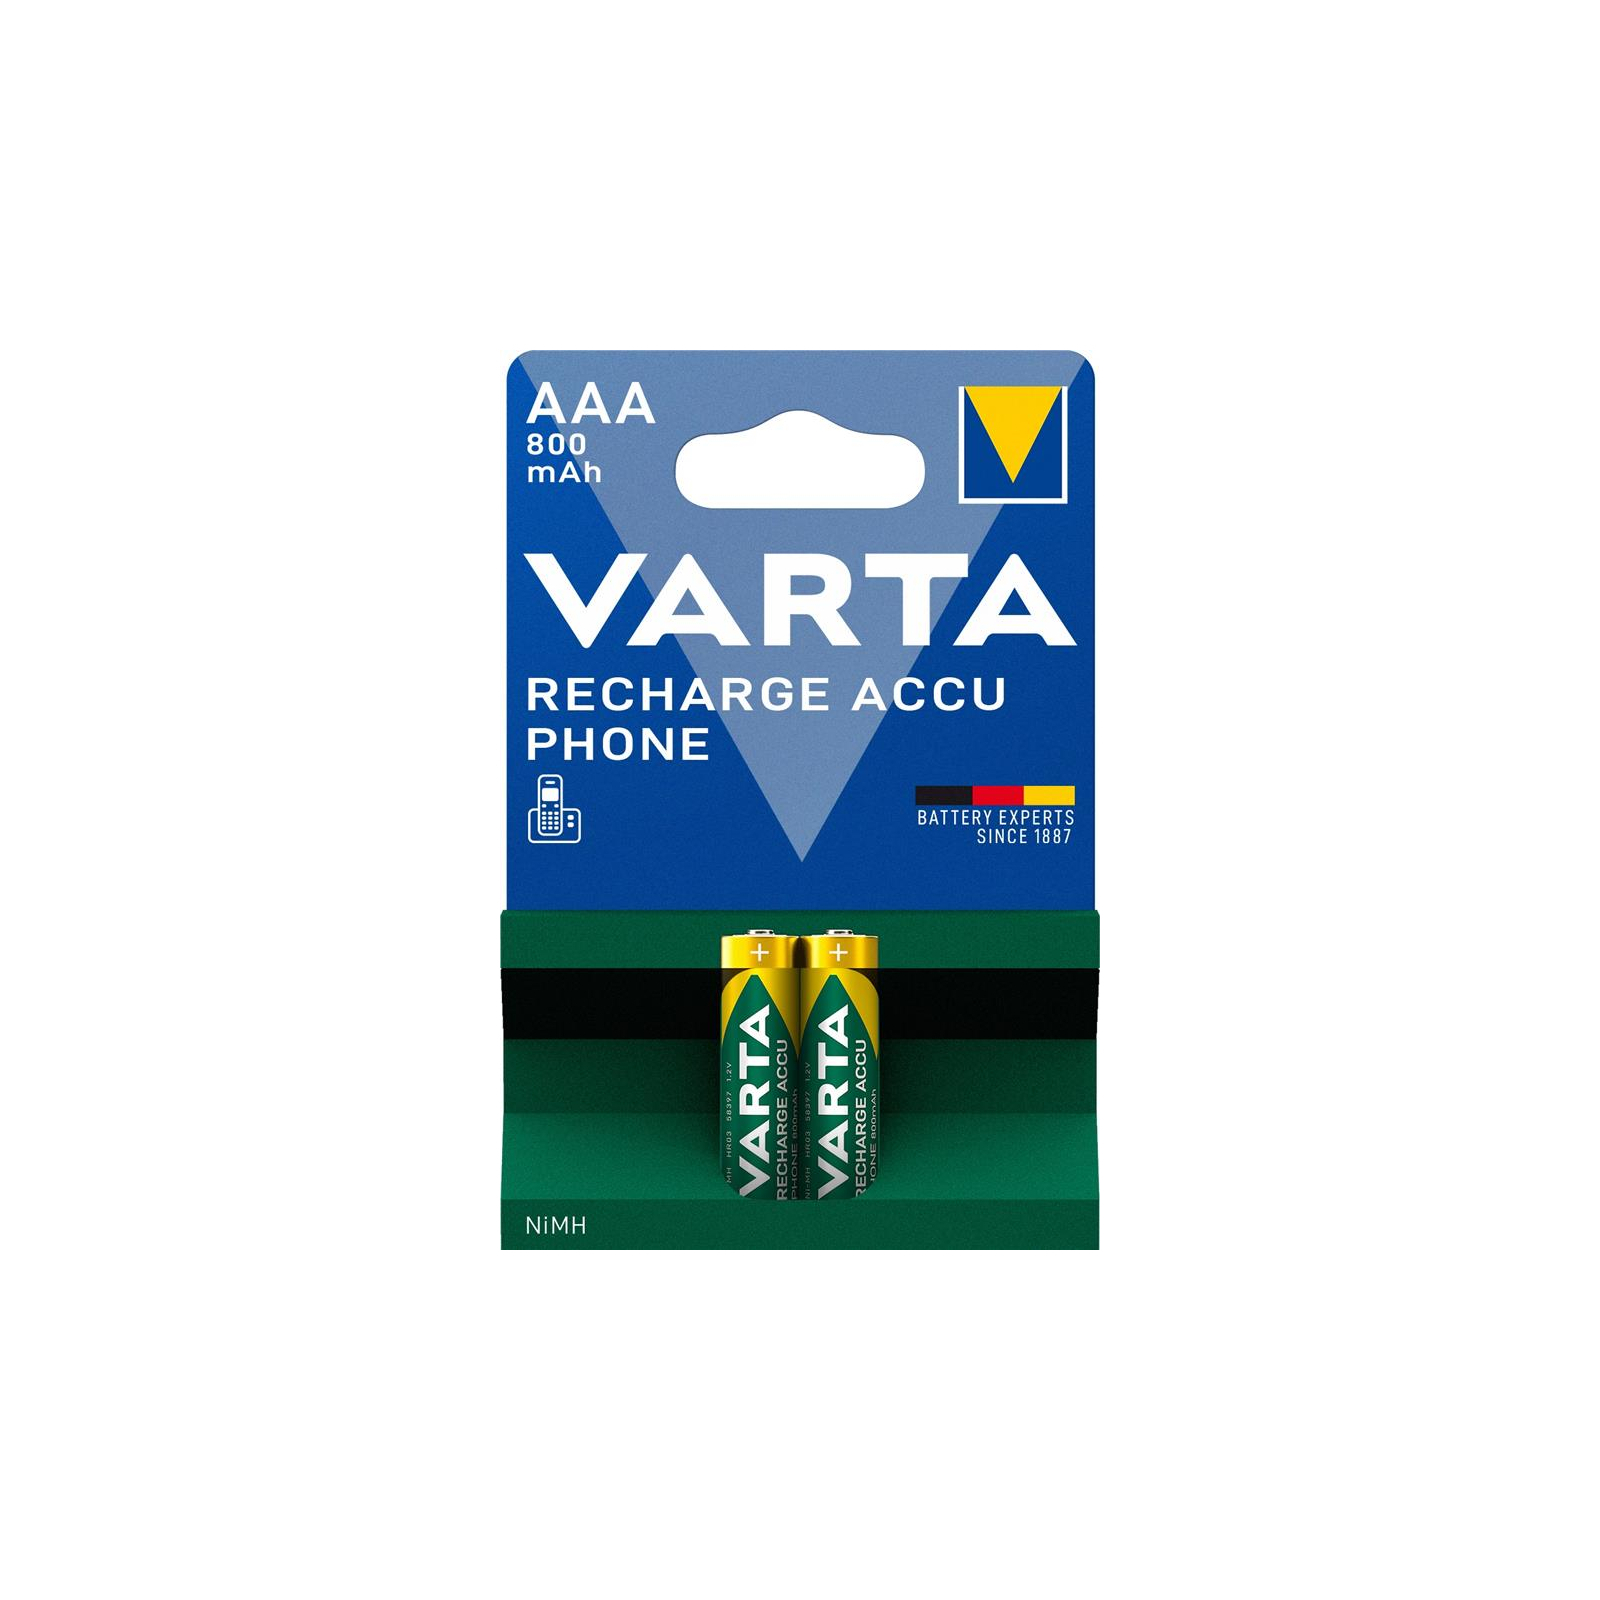 Аккумулятор Varta Phone AAA 800mAh NI-MH * 2 (58398101402)